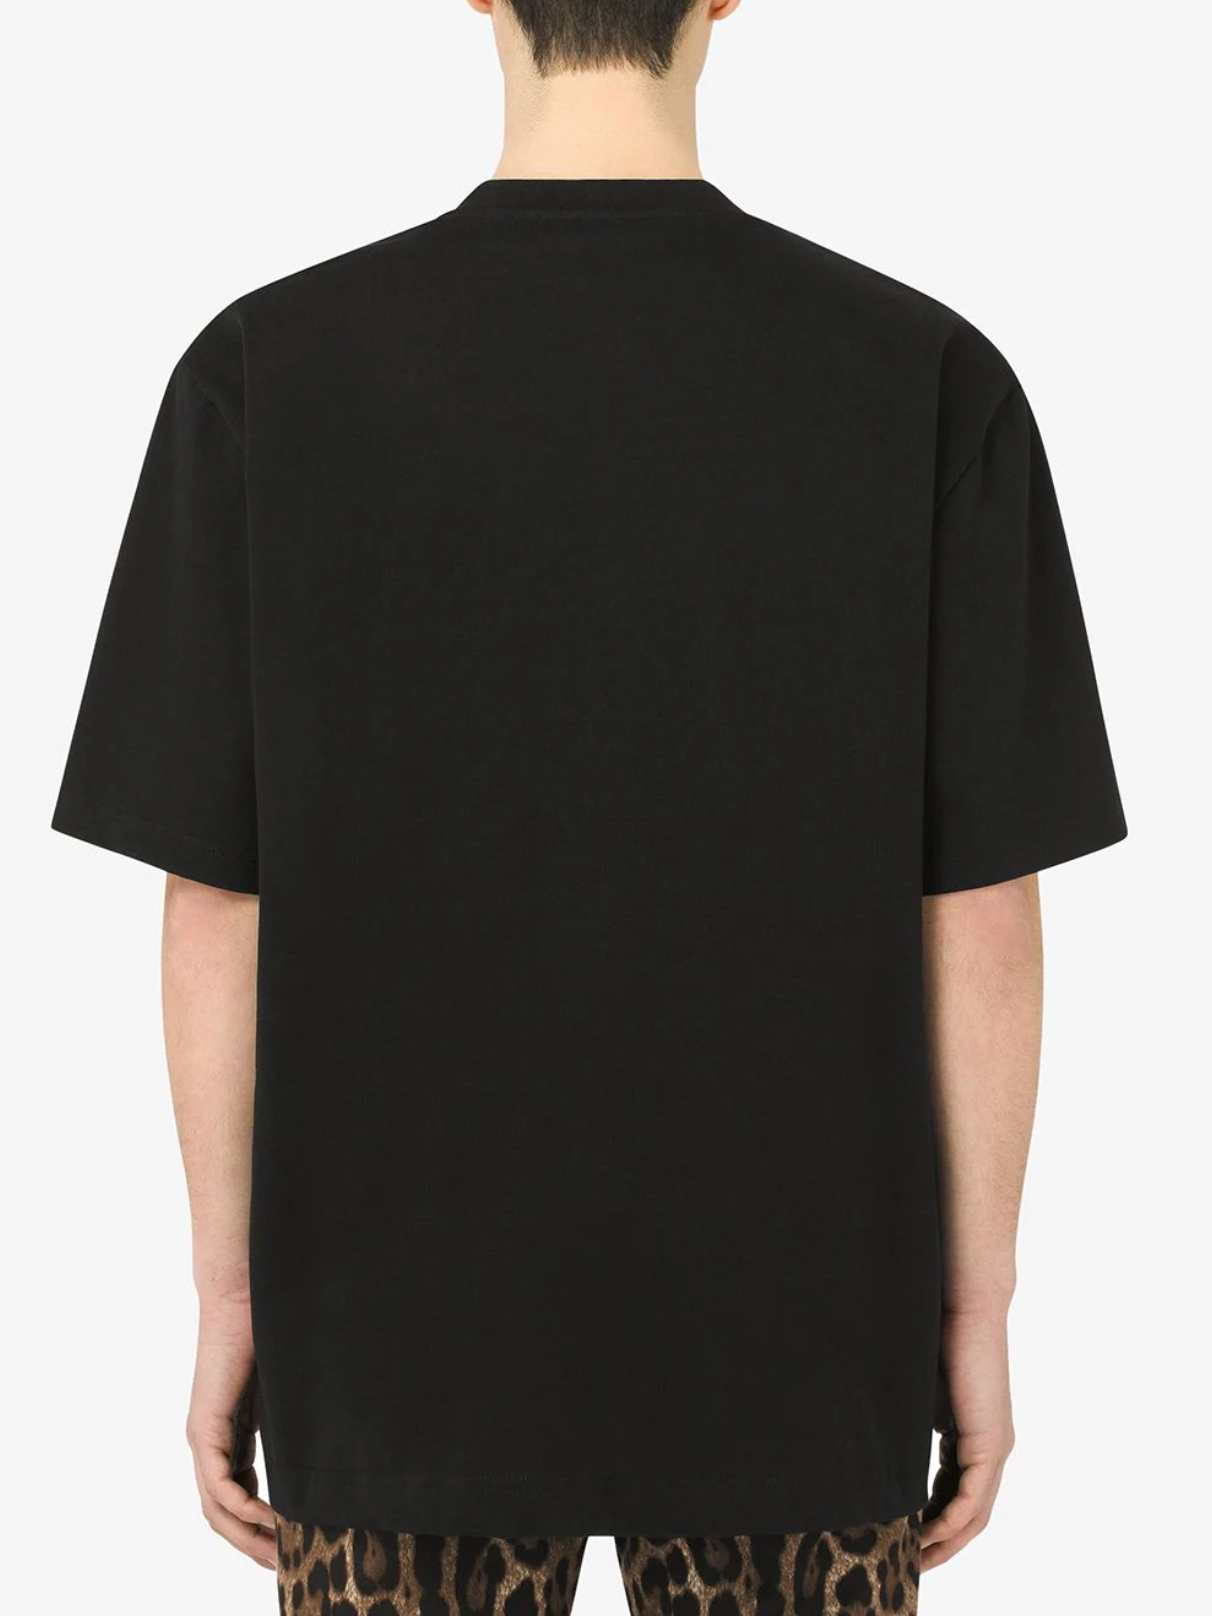 Elegant Embroidered Black T-Shirt